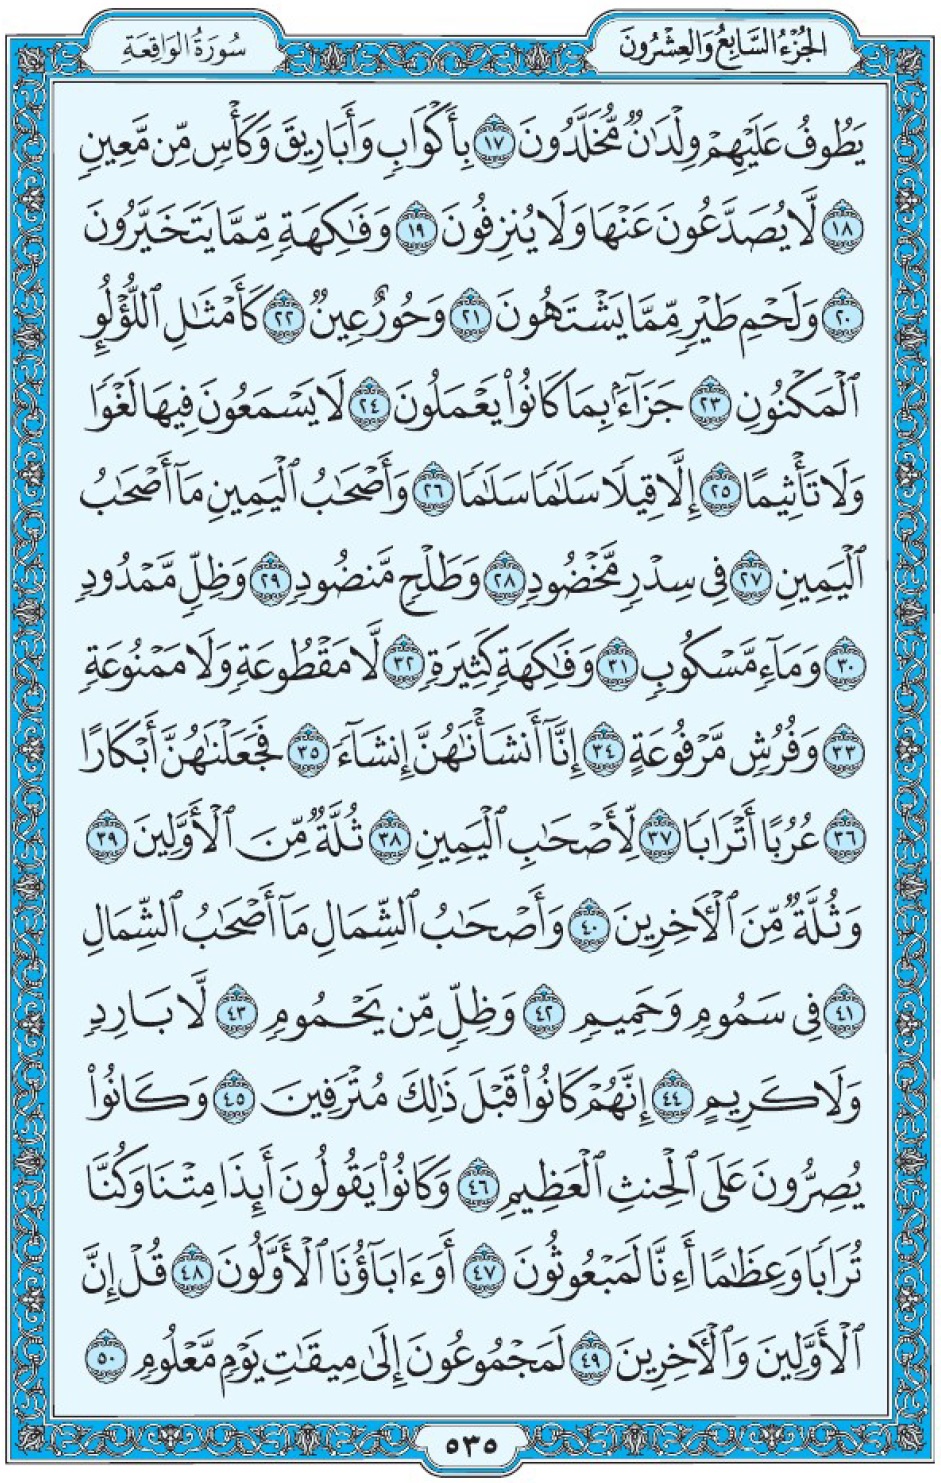 Коран Мединский мусхаф страница 535, сура аль-Уакы‘а, аят 17-50